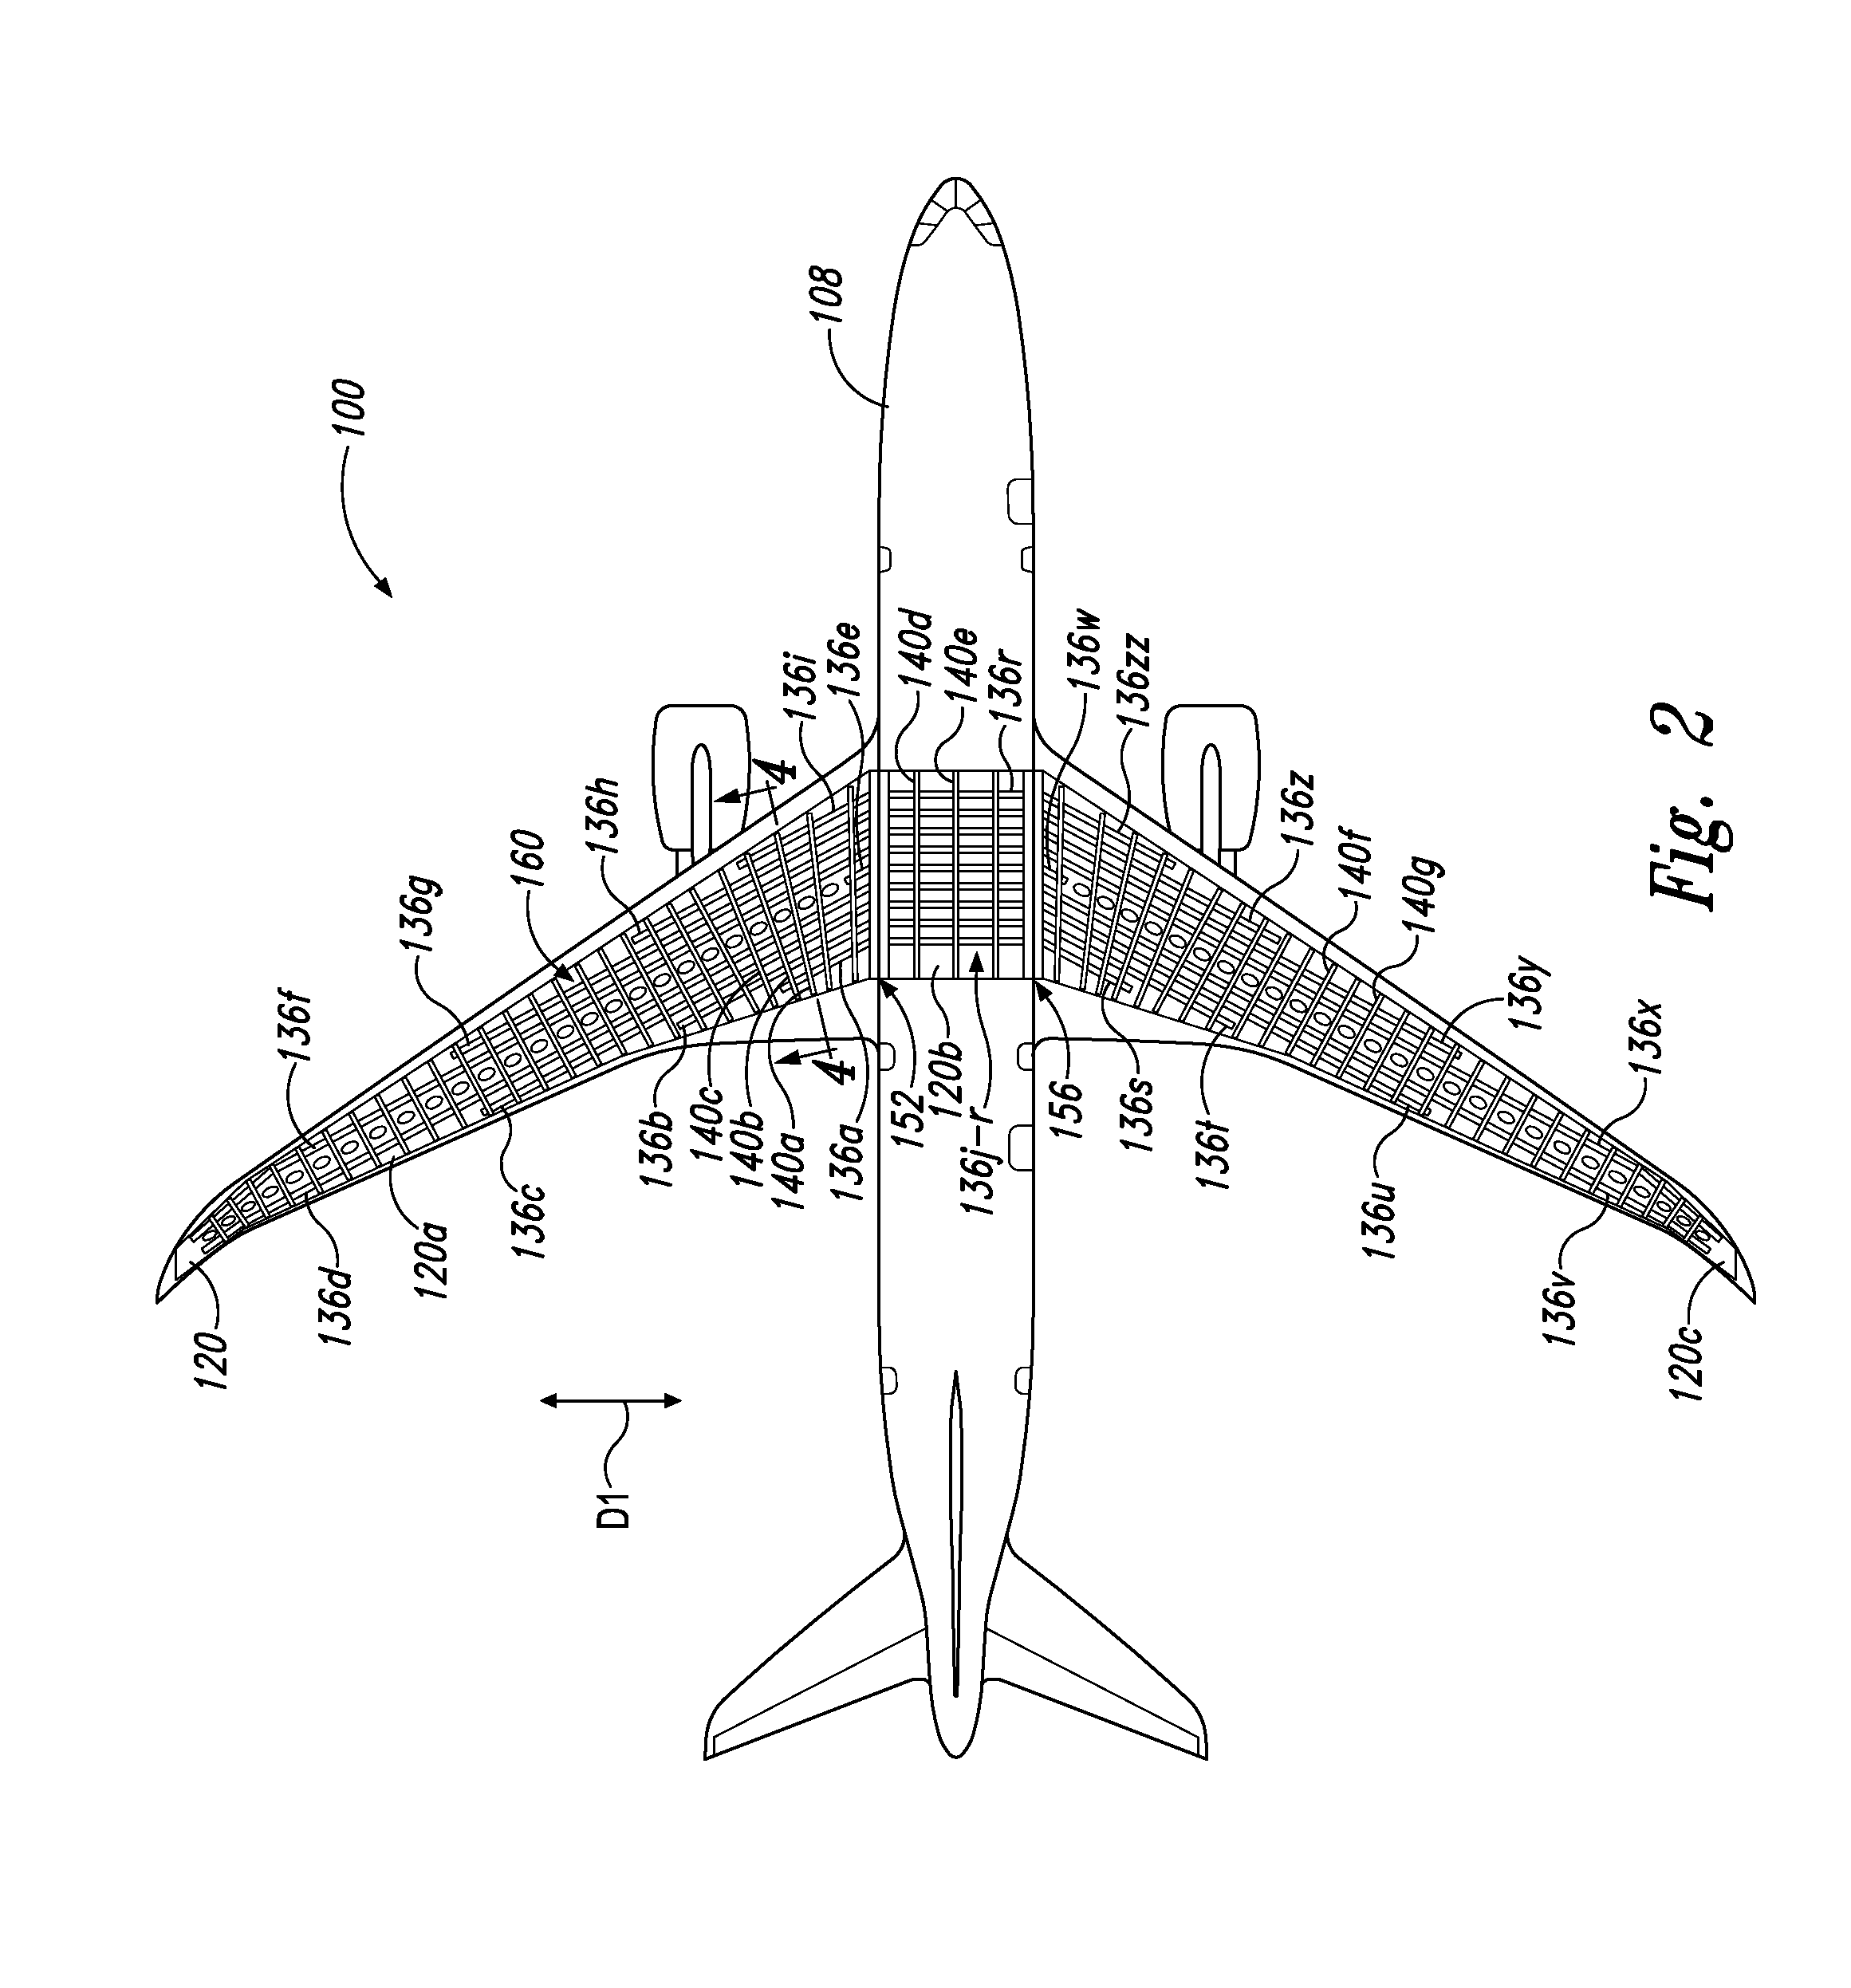 Laminate composite wing structures